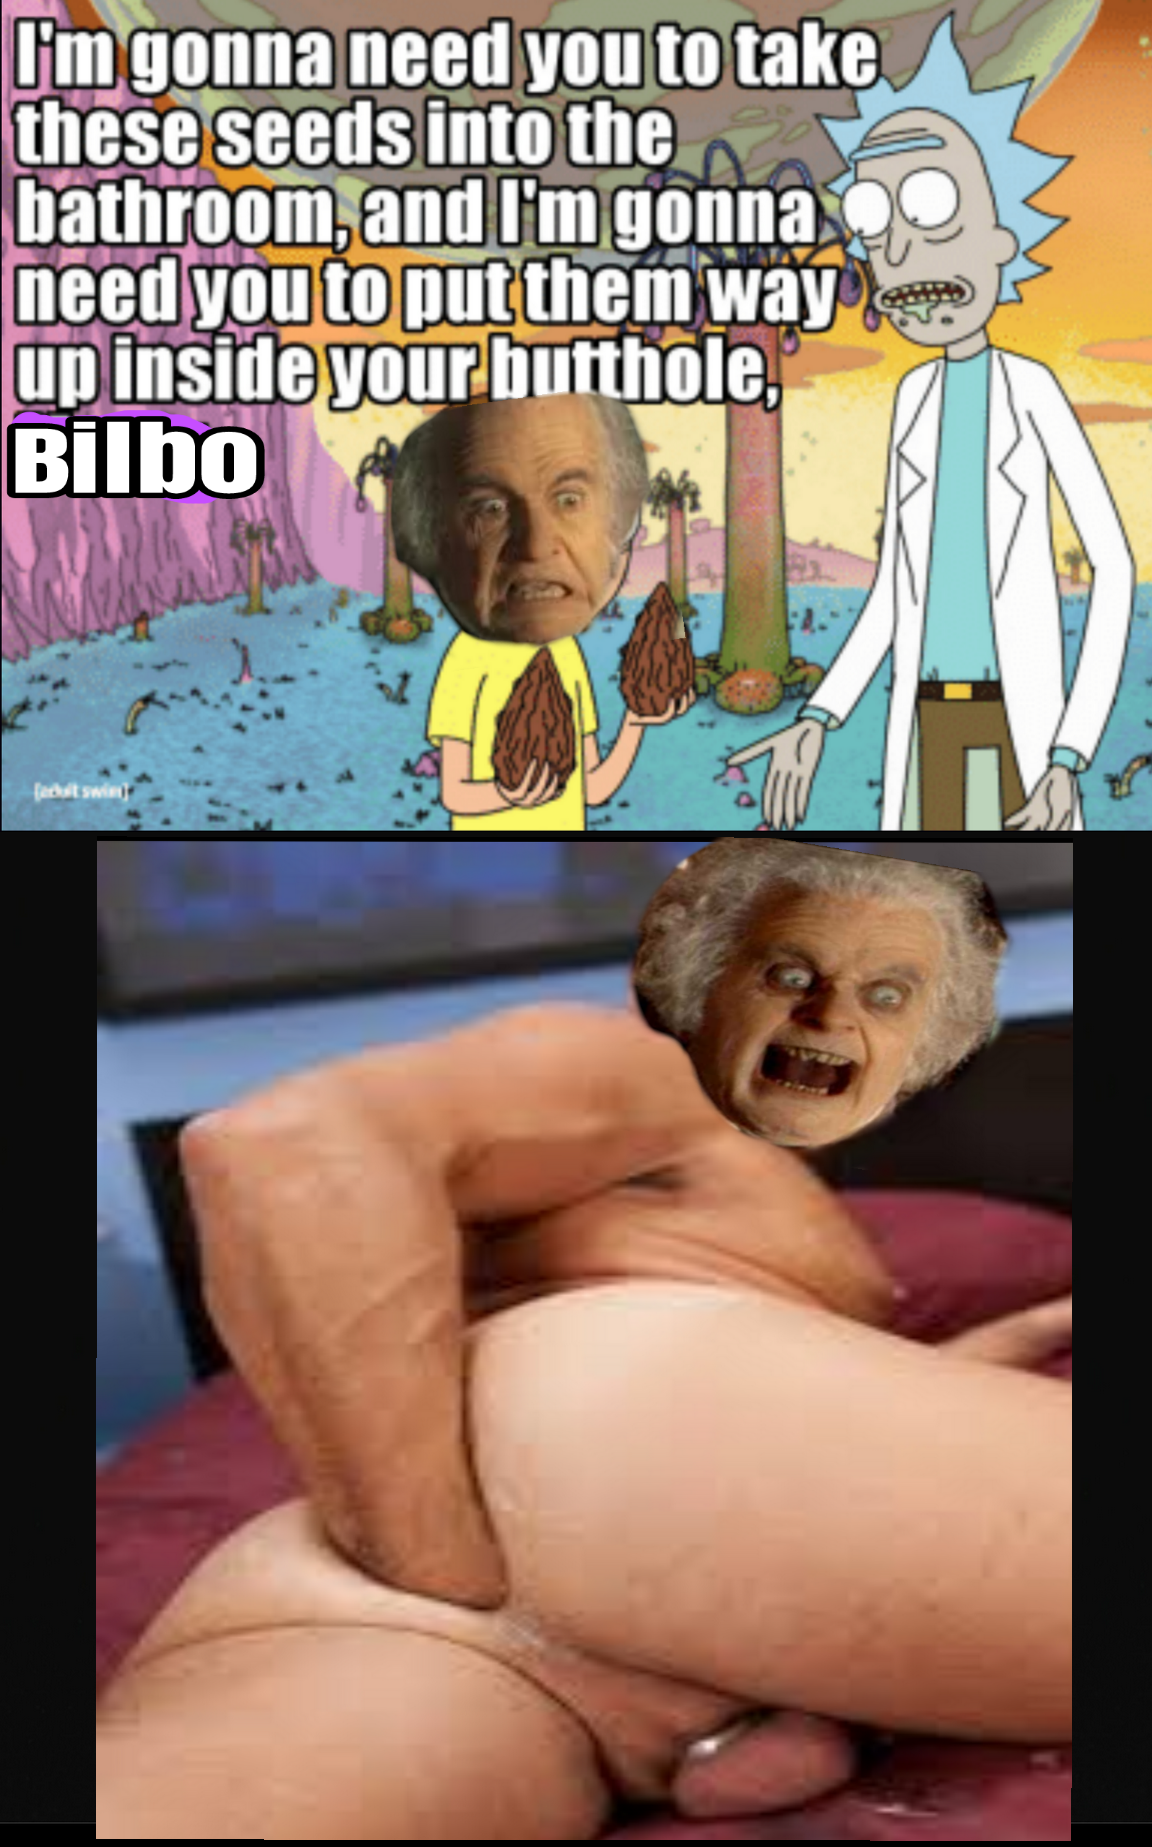 Rick and Bilbo go through customs